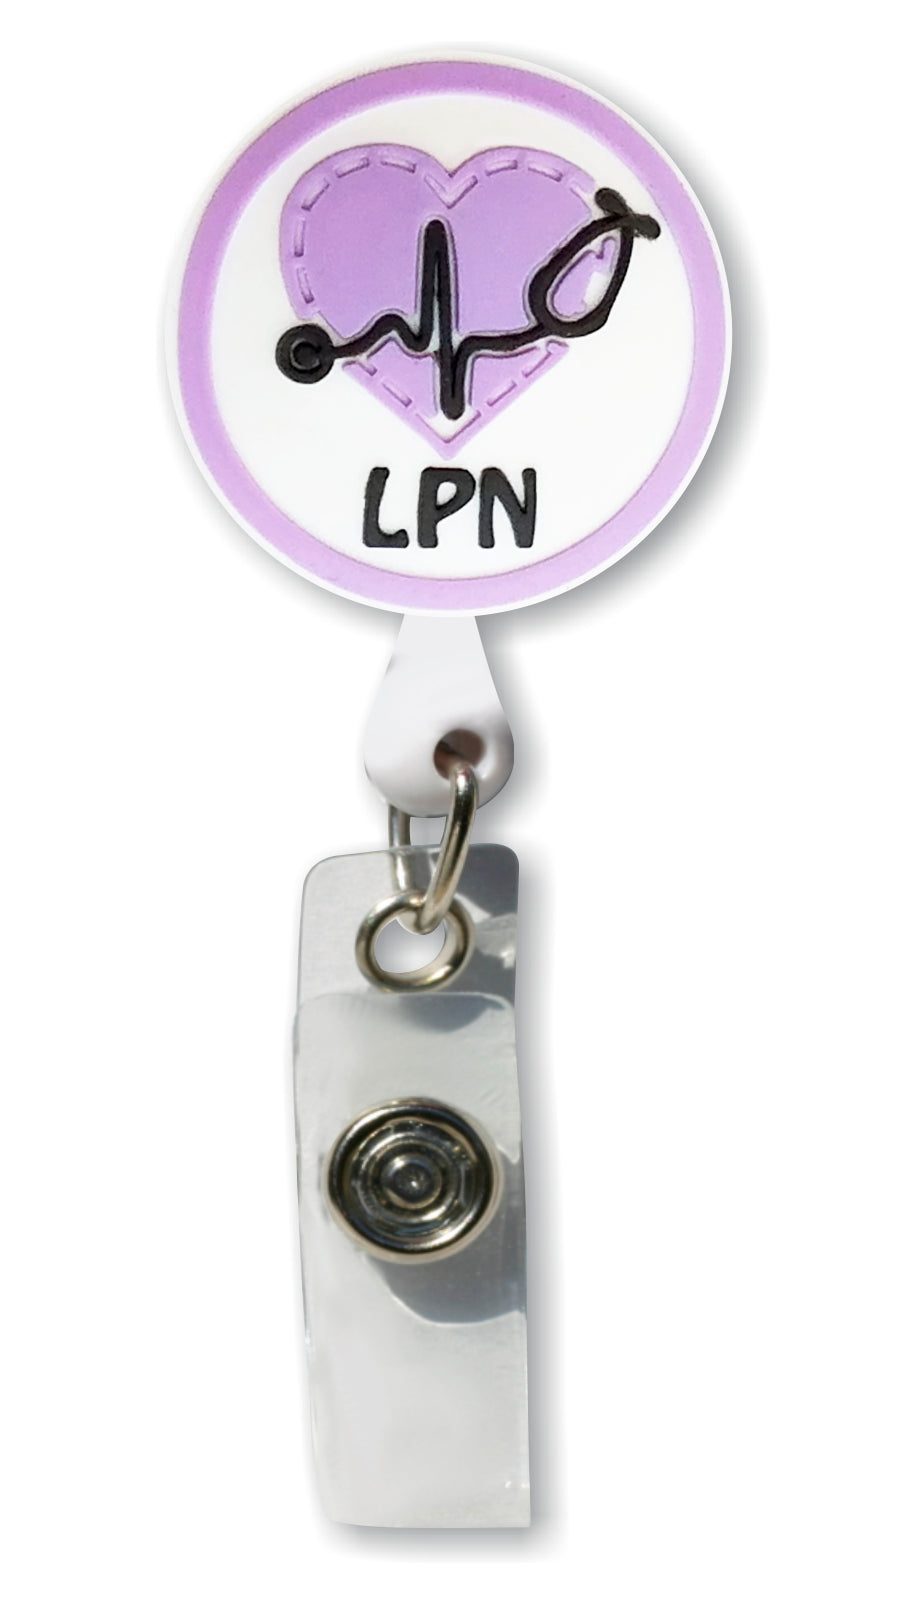 purple lvn badge